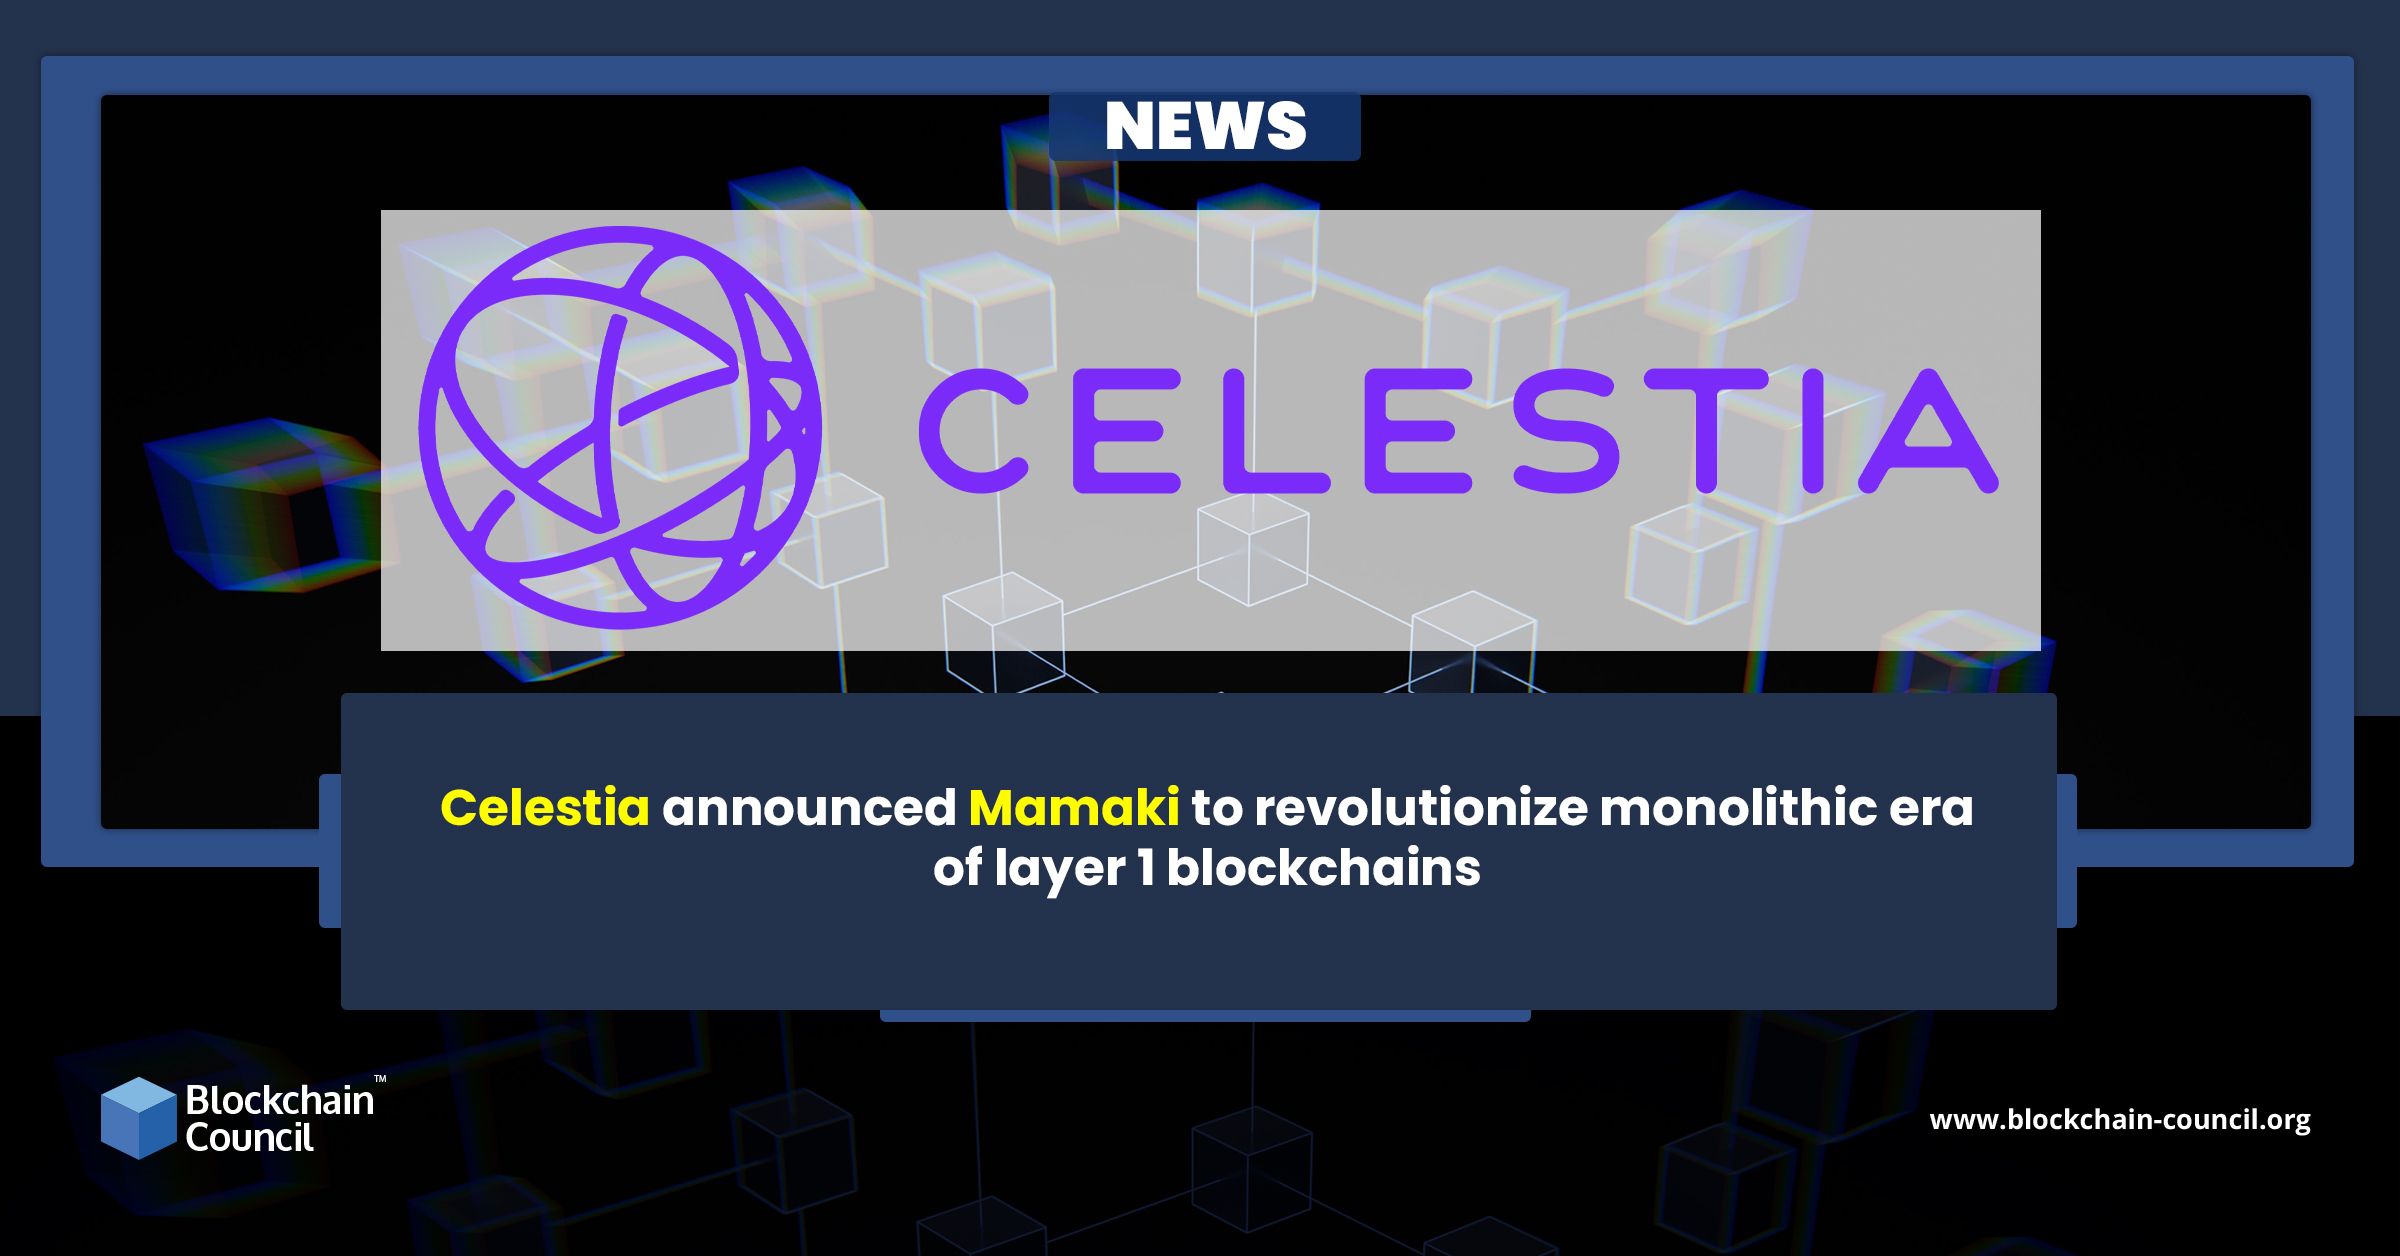 Celestia announced Mamaki to revolutionize monolithic era of layer 1 blockchains